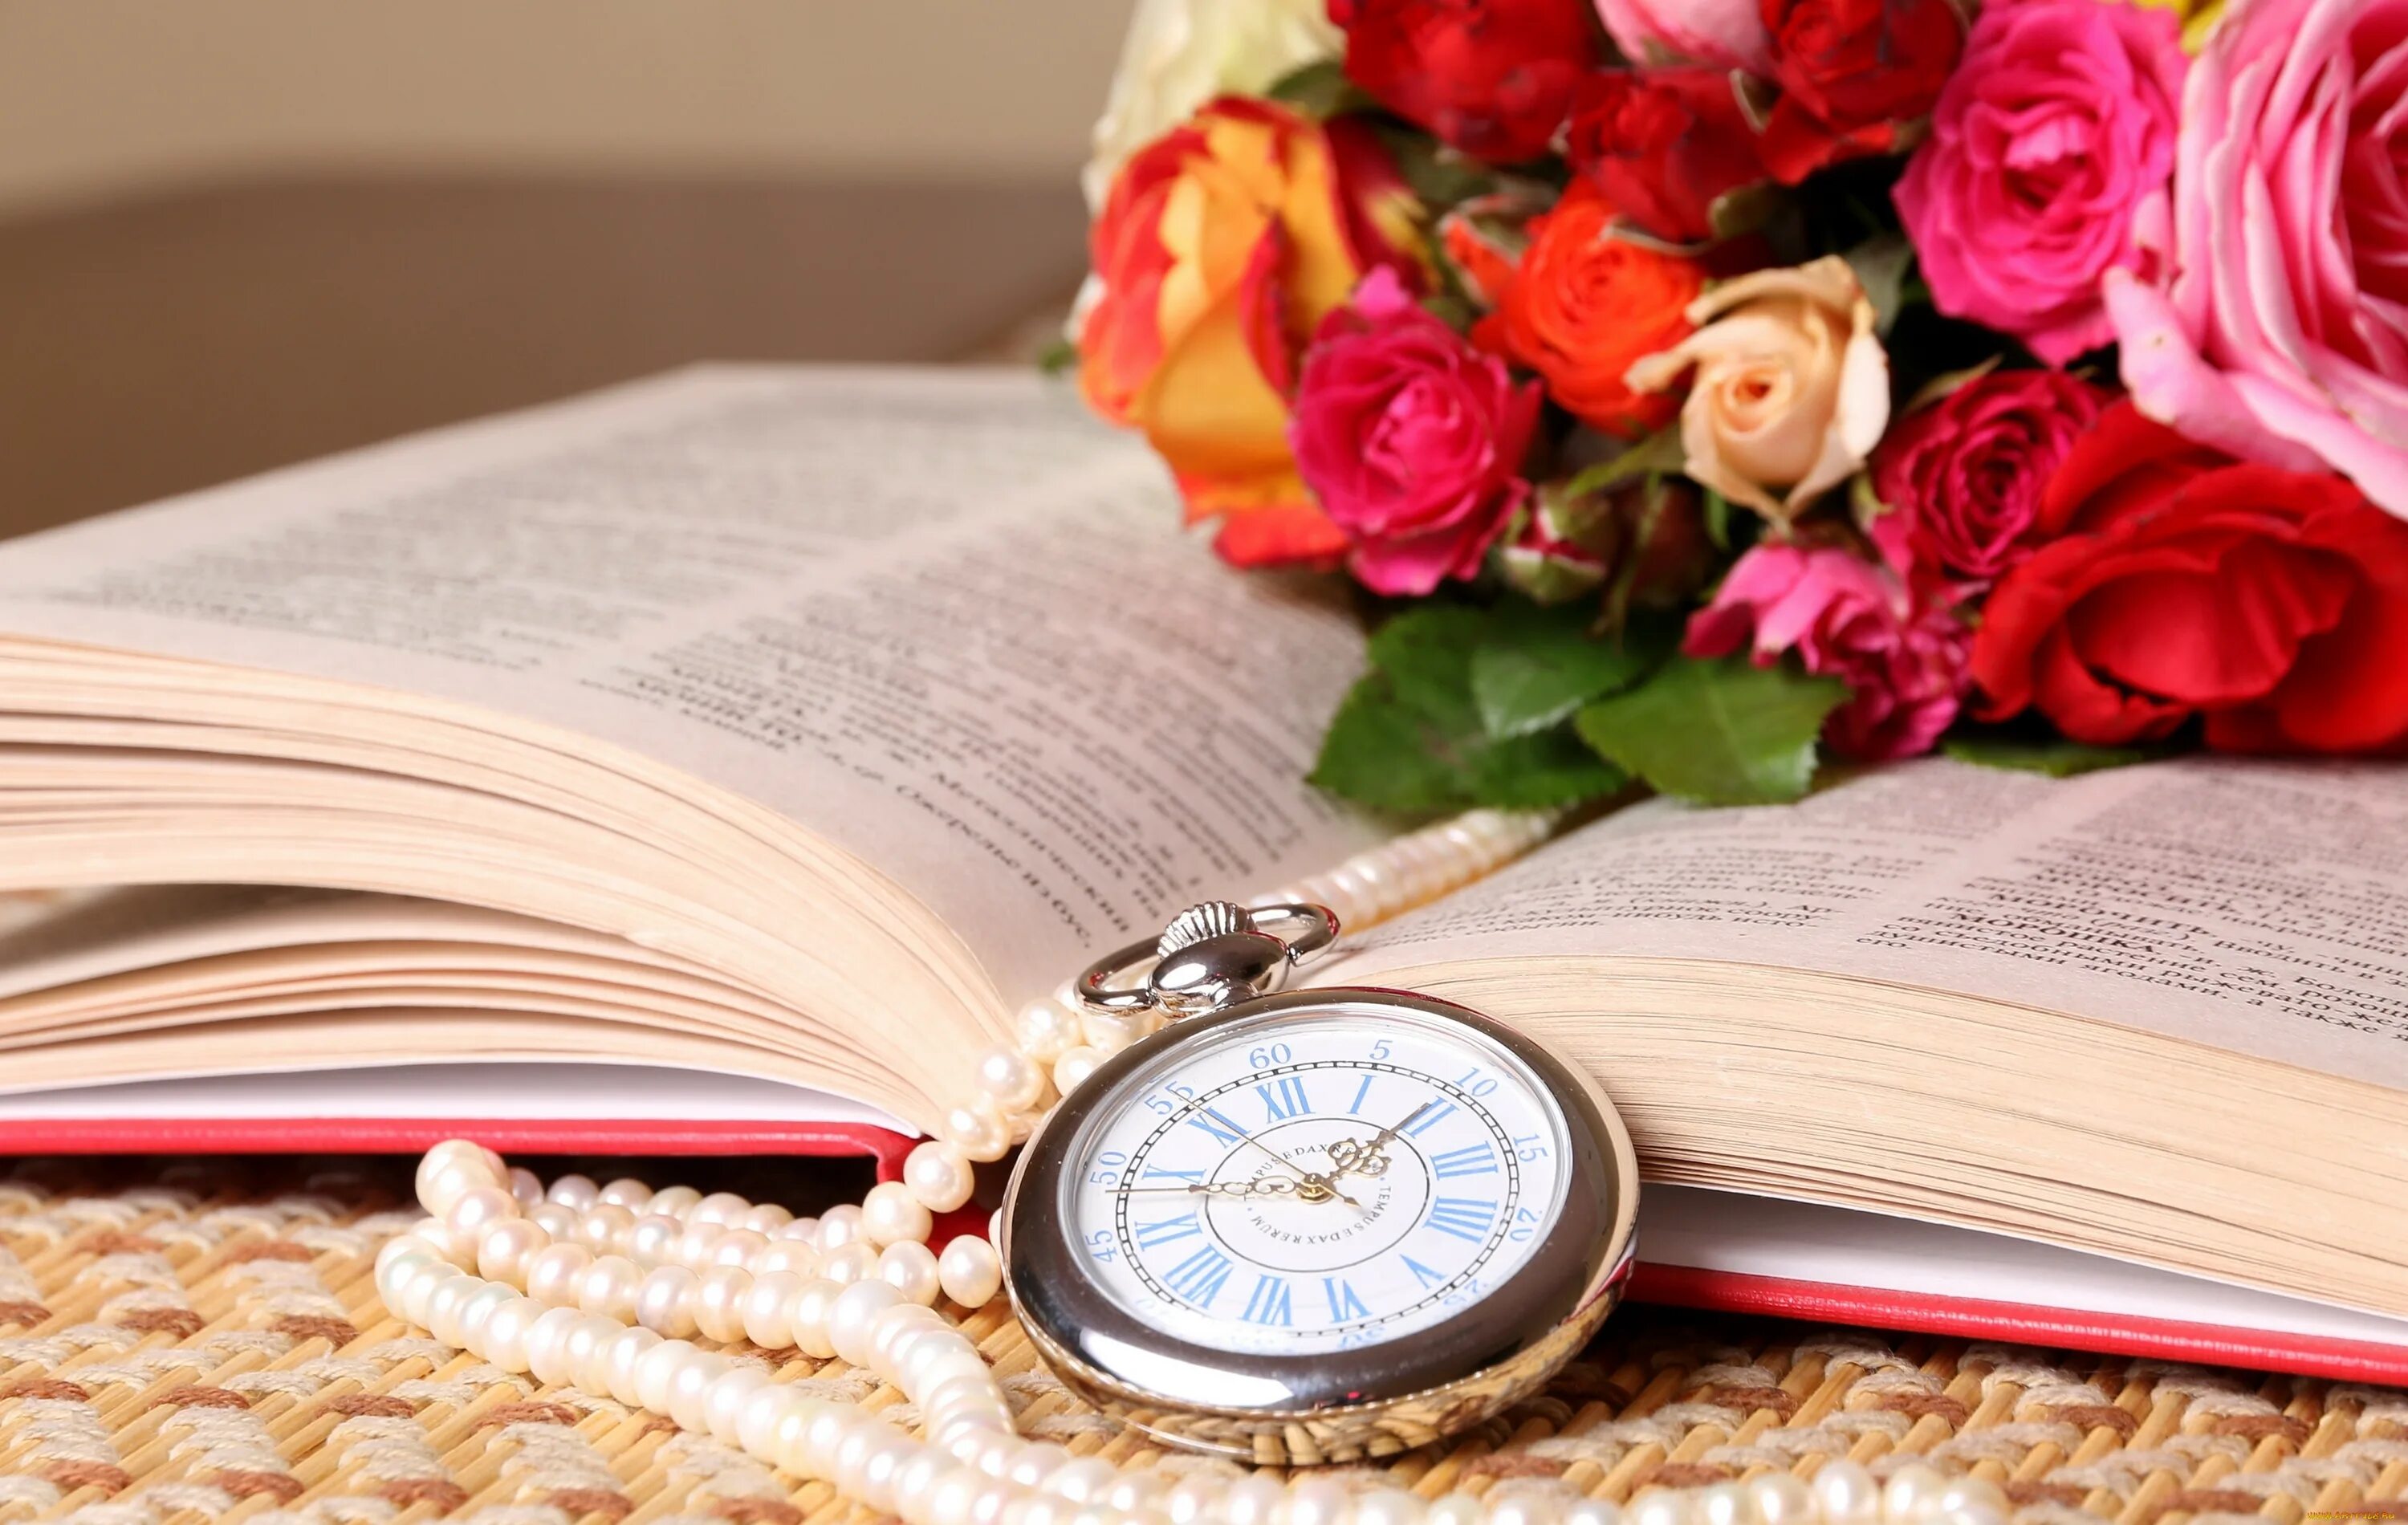 Книга цветы. Фон книги и цветы. Книга и часы. Книга с цветами.